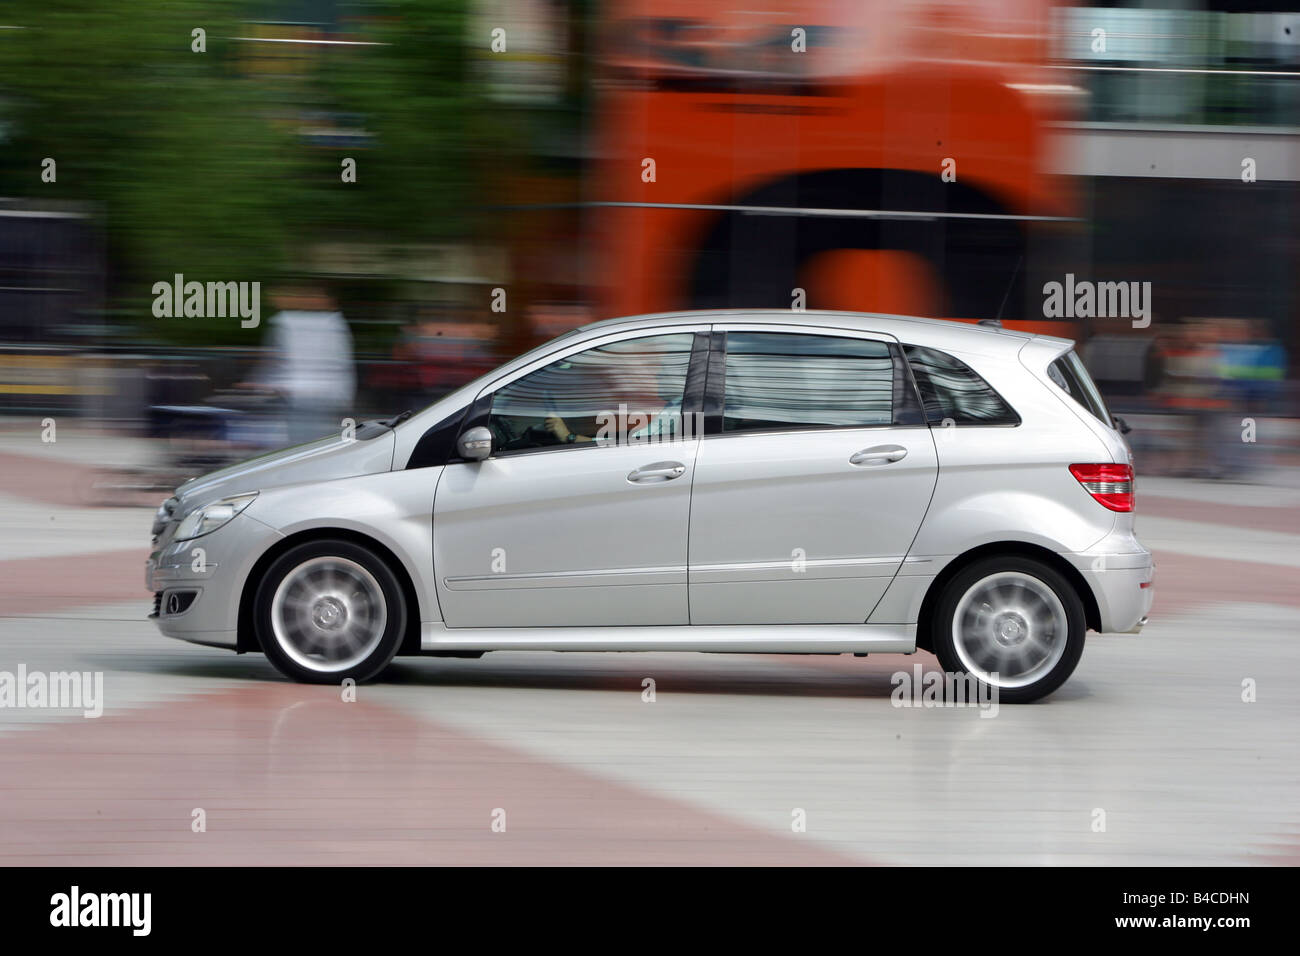 https://c8.alamy.com/comp/B4CDHN/car-mercedes-b-200-cdi-model-year-2005-silver-van-driving-side-view-B4CDHN.jpg